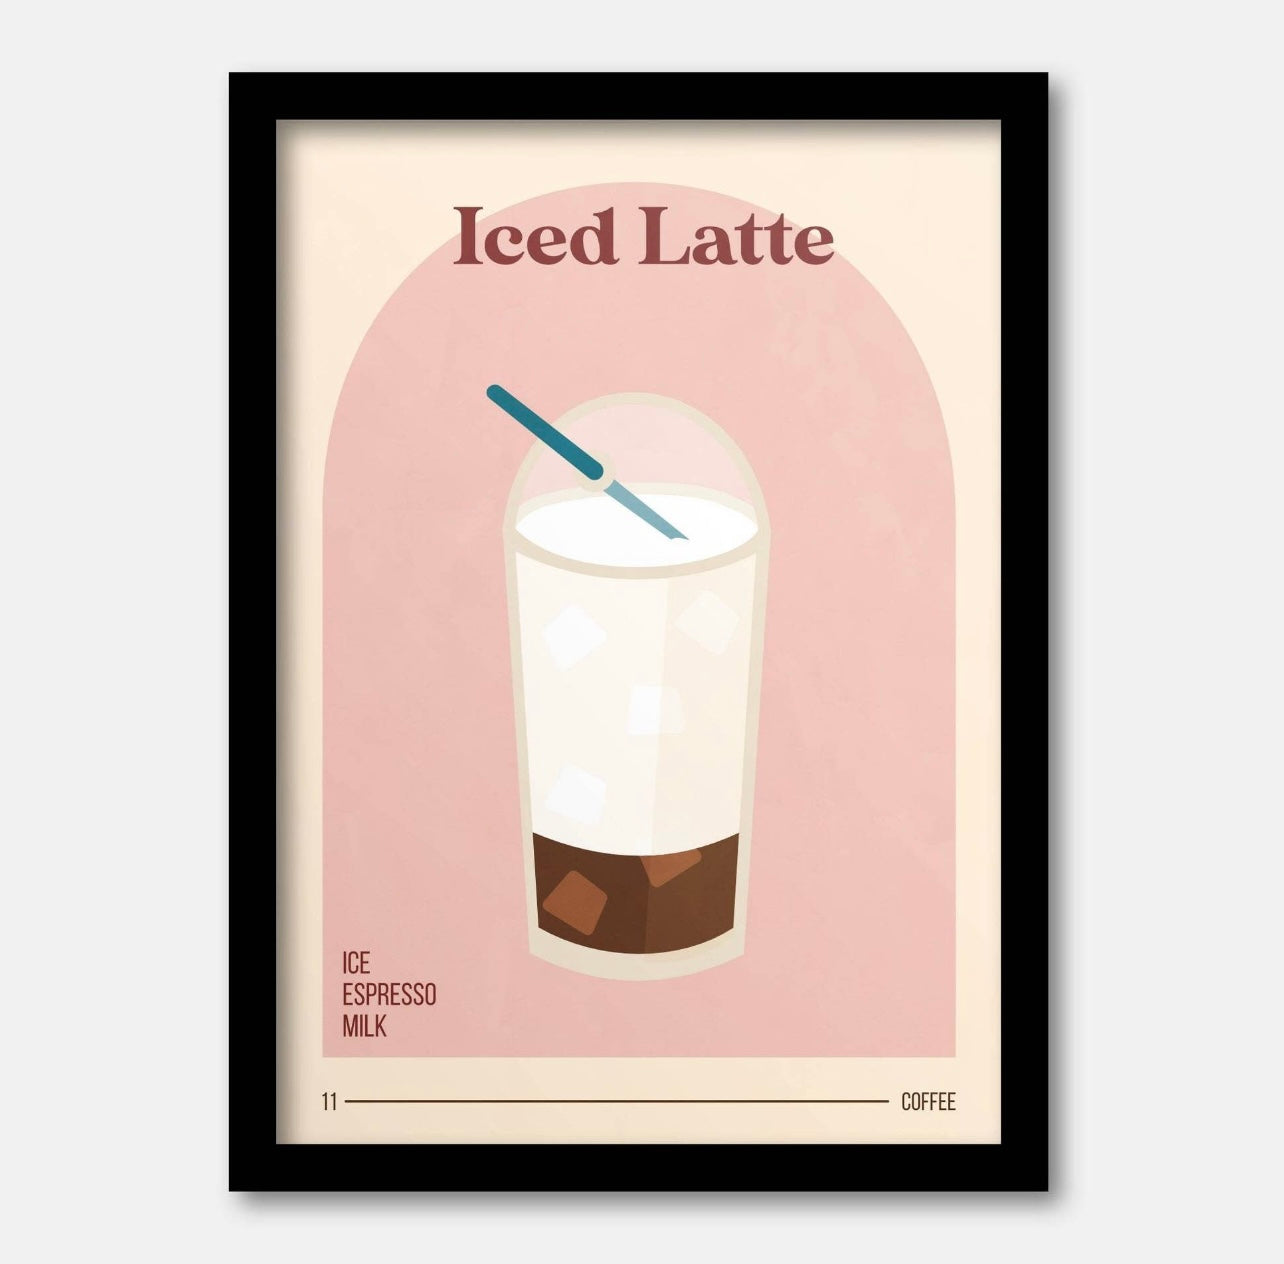 Iced Latte A4 Print